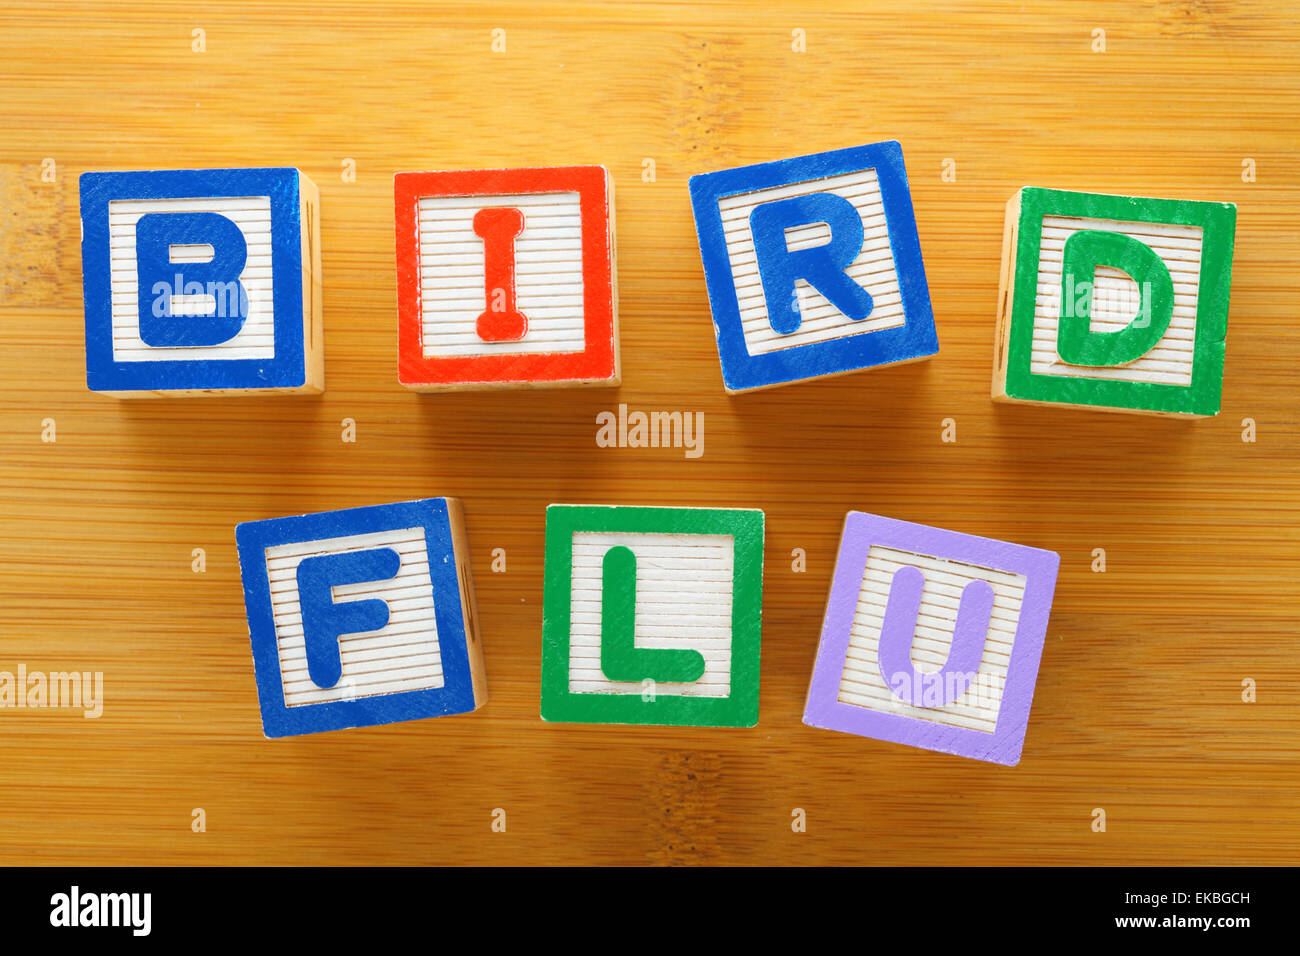 H7N9 bird flu toy block Stock Photo